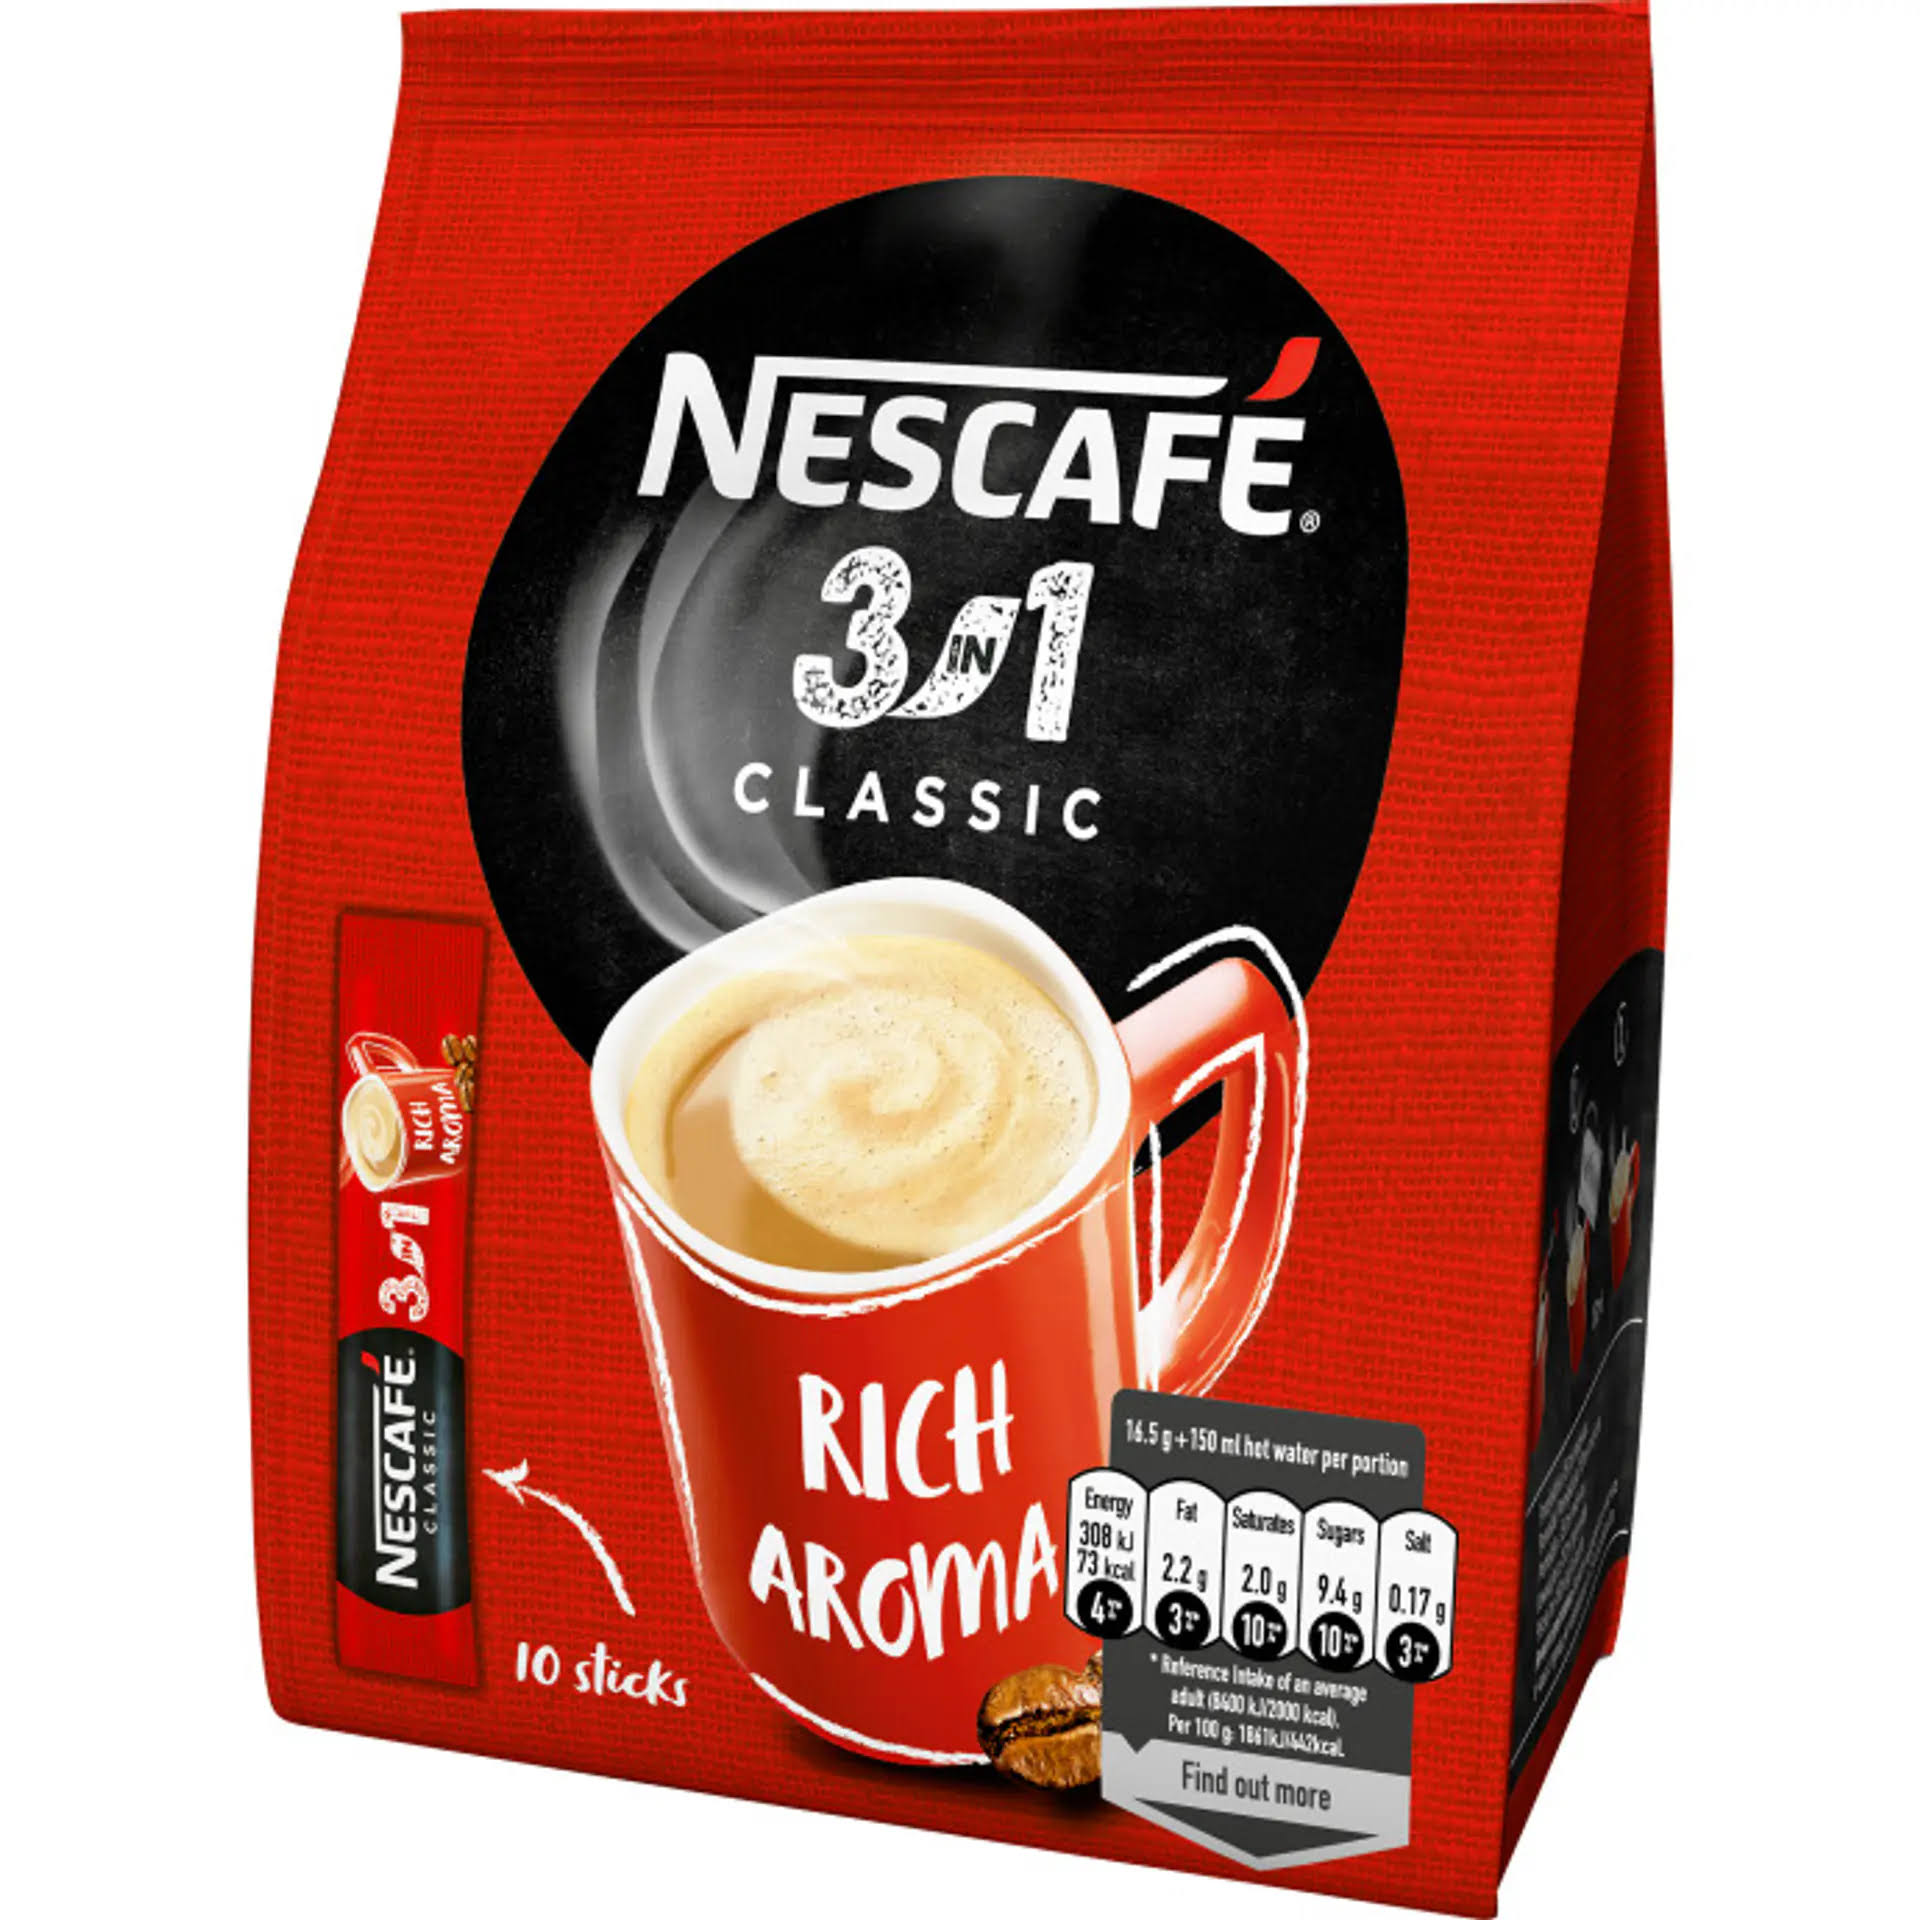 Nescafe- 3 in 1 Classic Instant Coffee Case- 10 Sticks